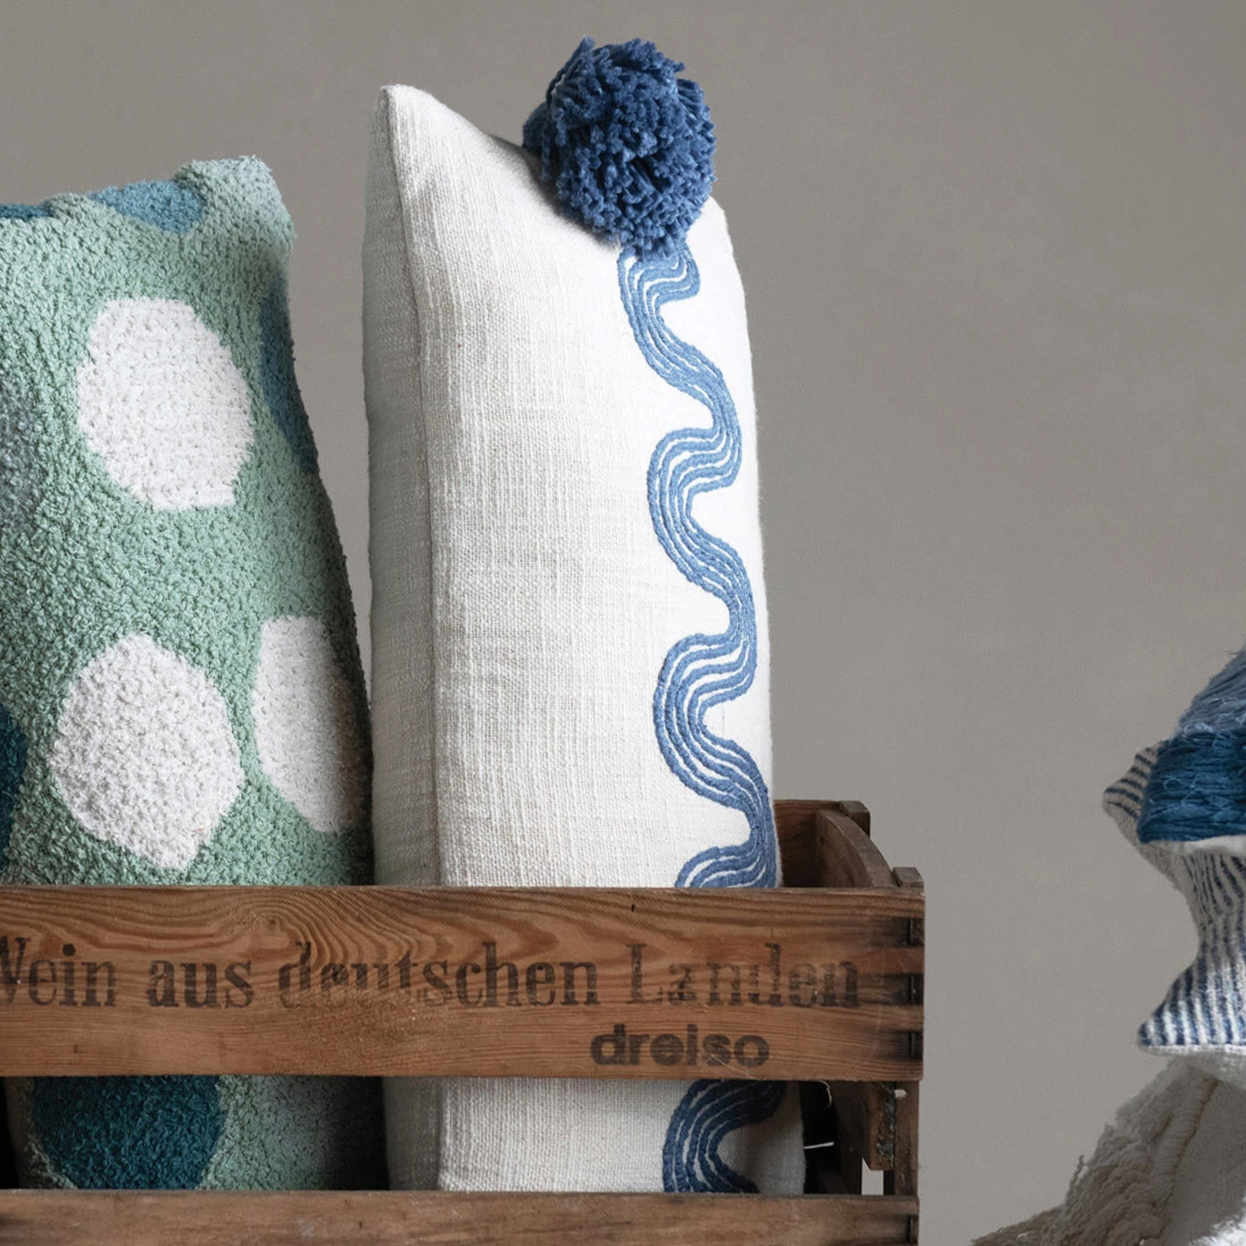 Coastal Decorative Pillows, Stripe Tassel, Sky Blue | Crumbs Home